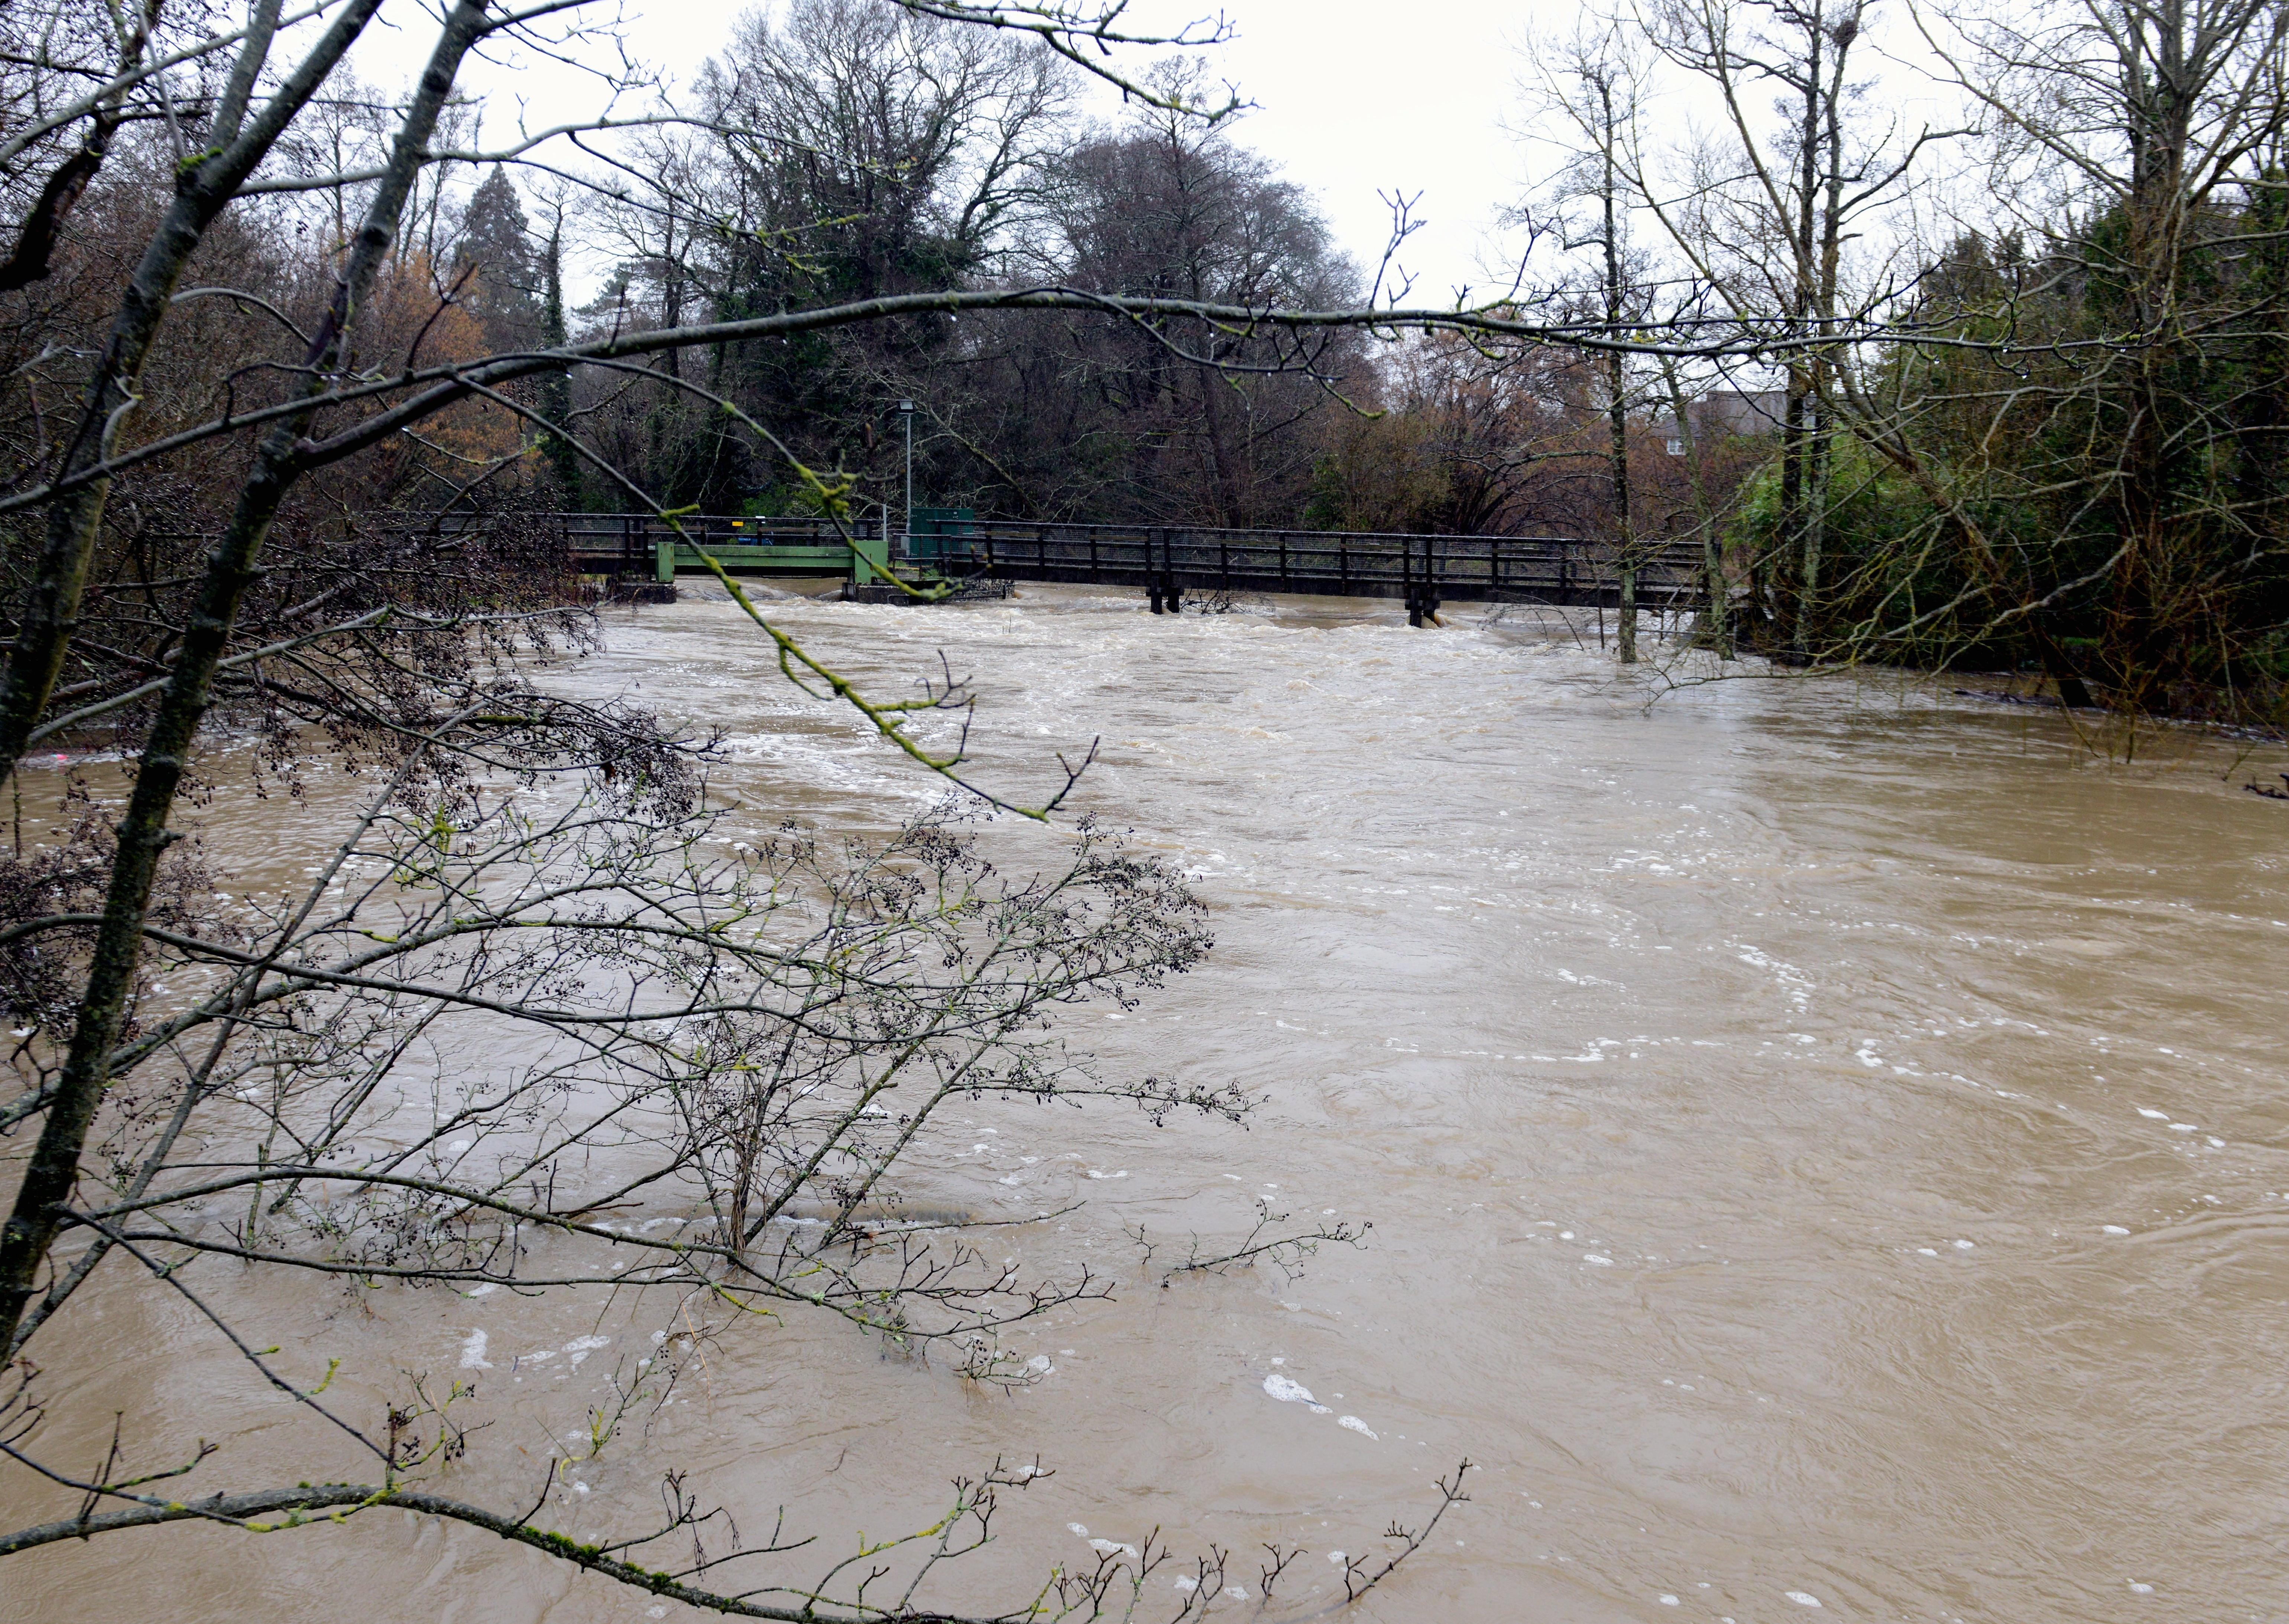 ks20062-3 Dennis Mid Pet Flood  phot kate
The river Rother in Midhurst.ks20062-3 SUS-200216-183429008